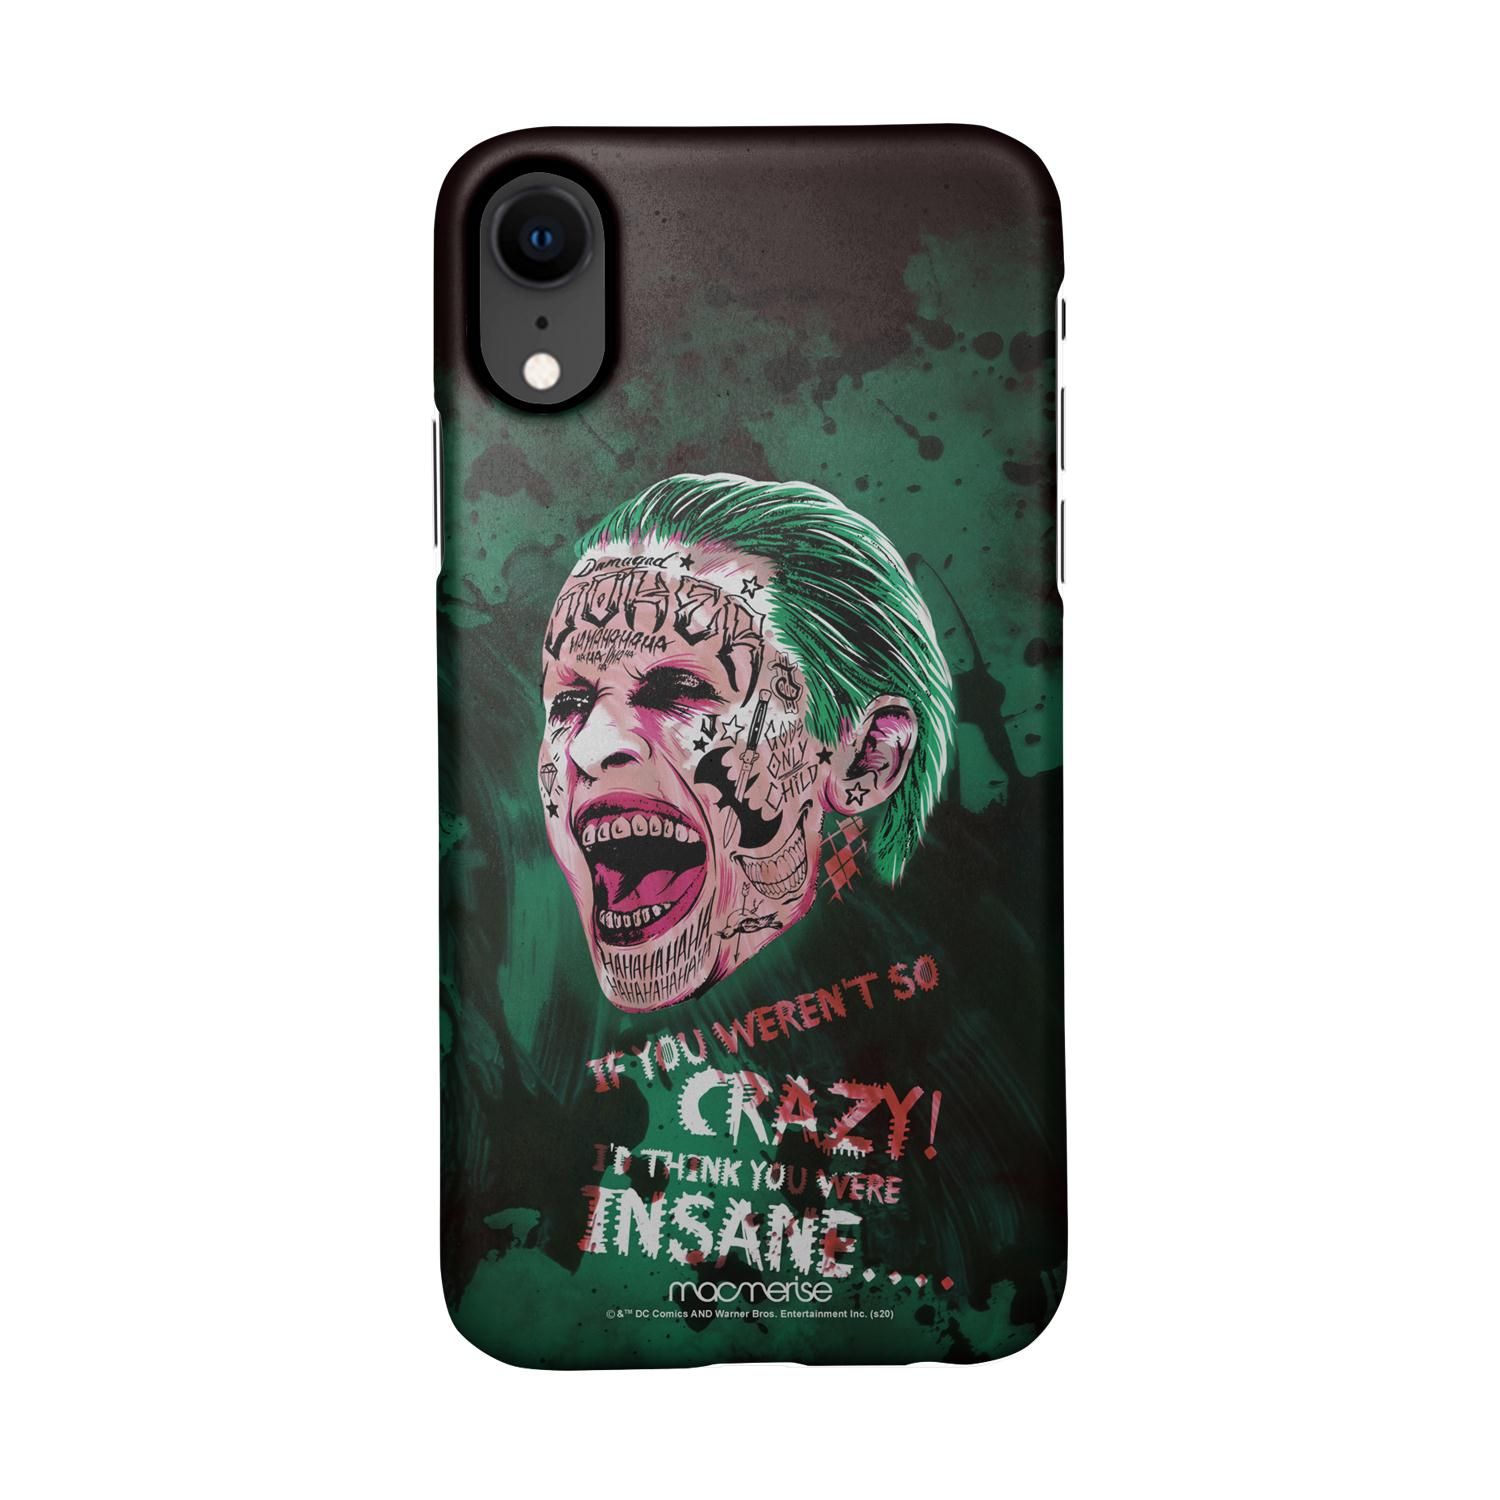 Crazy Insane Joker - Sleek Phone Case for iPhone XR